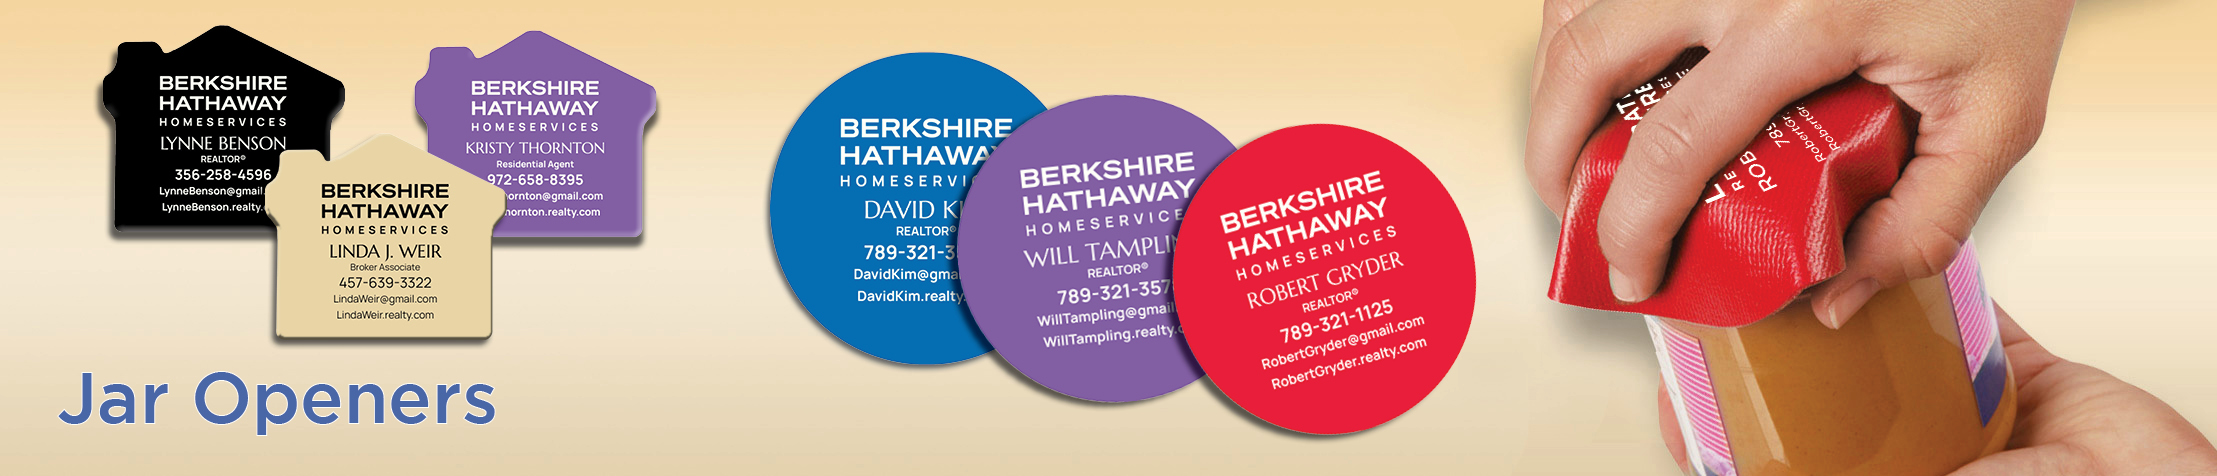 Berkshire Hathaway Real Estate Jar Openers - Berkshire Hathaway  personalized realtor promotional products | BestPrintBuy.com